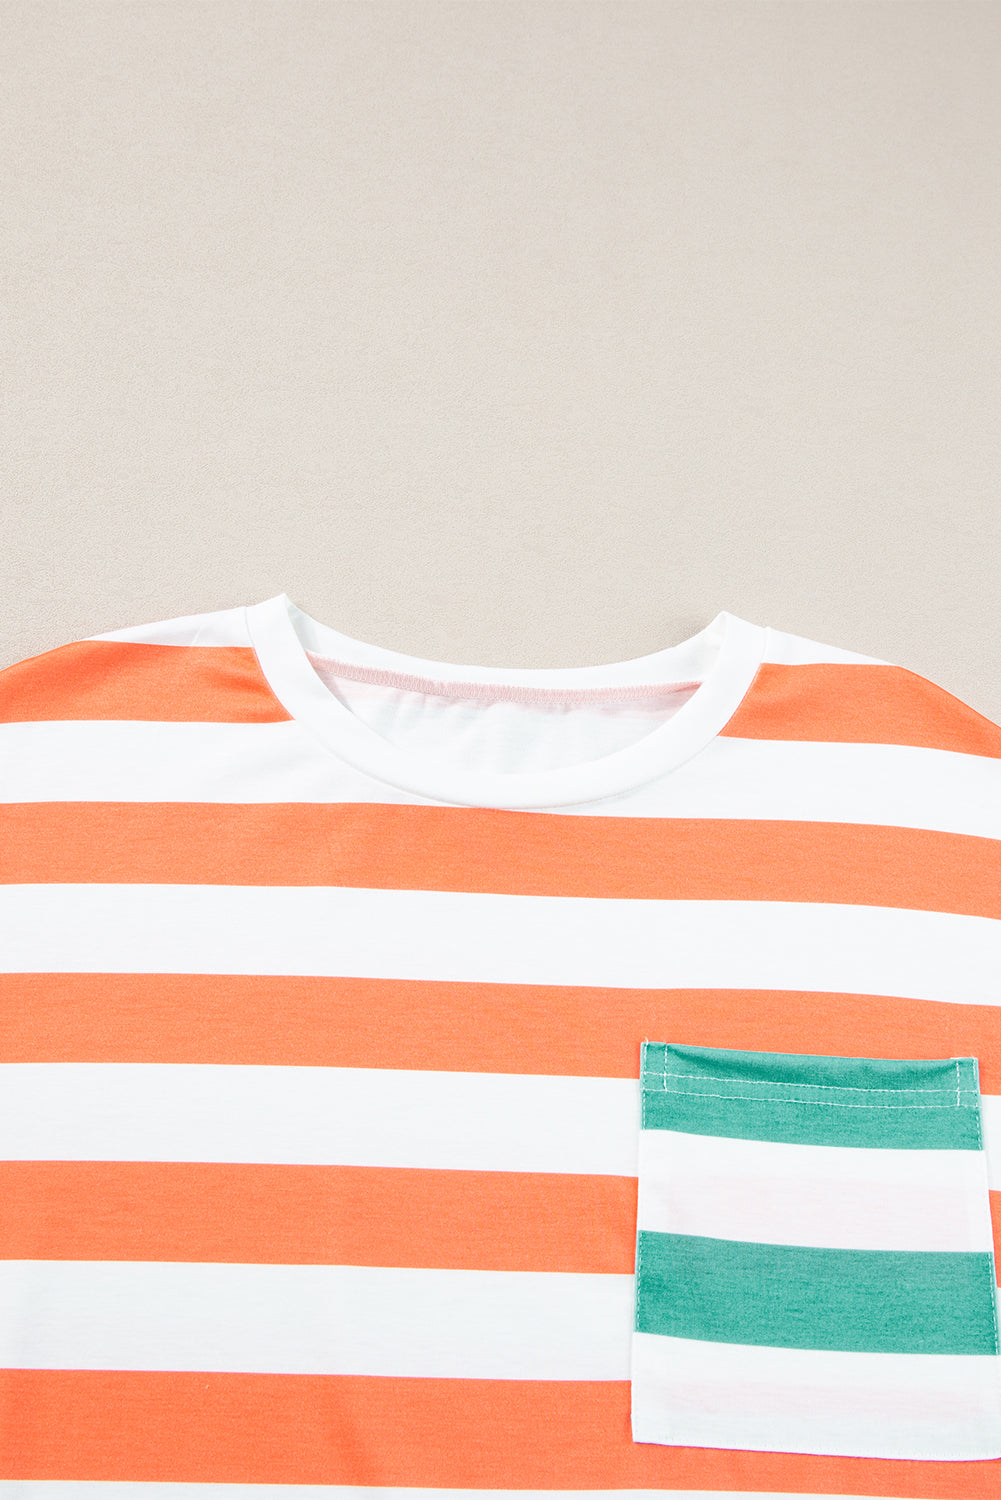 Orange Stripe Contrast Patch Pocket Drop Sleeve T Shirt